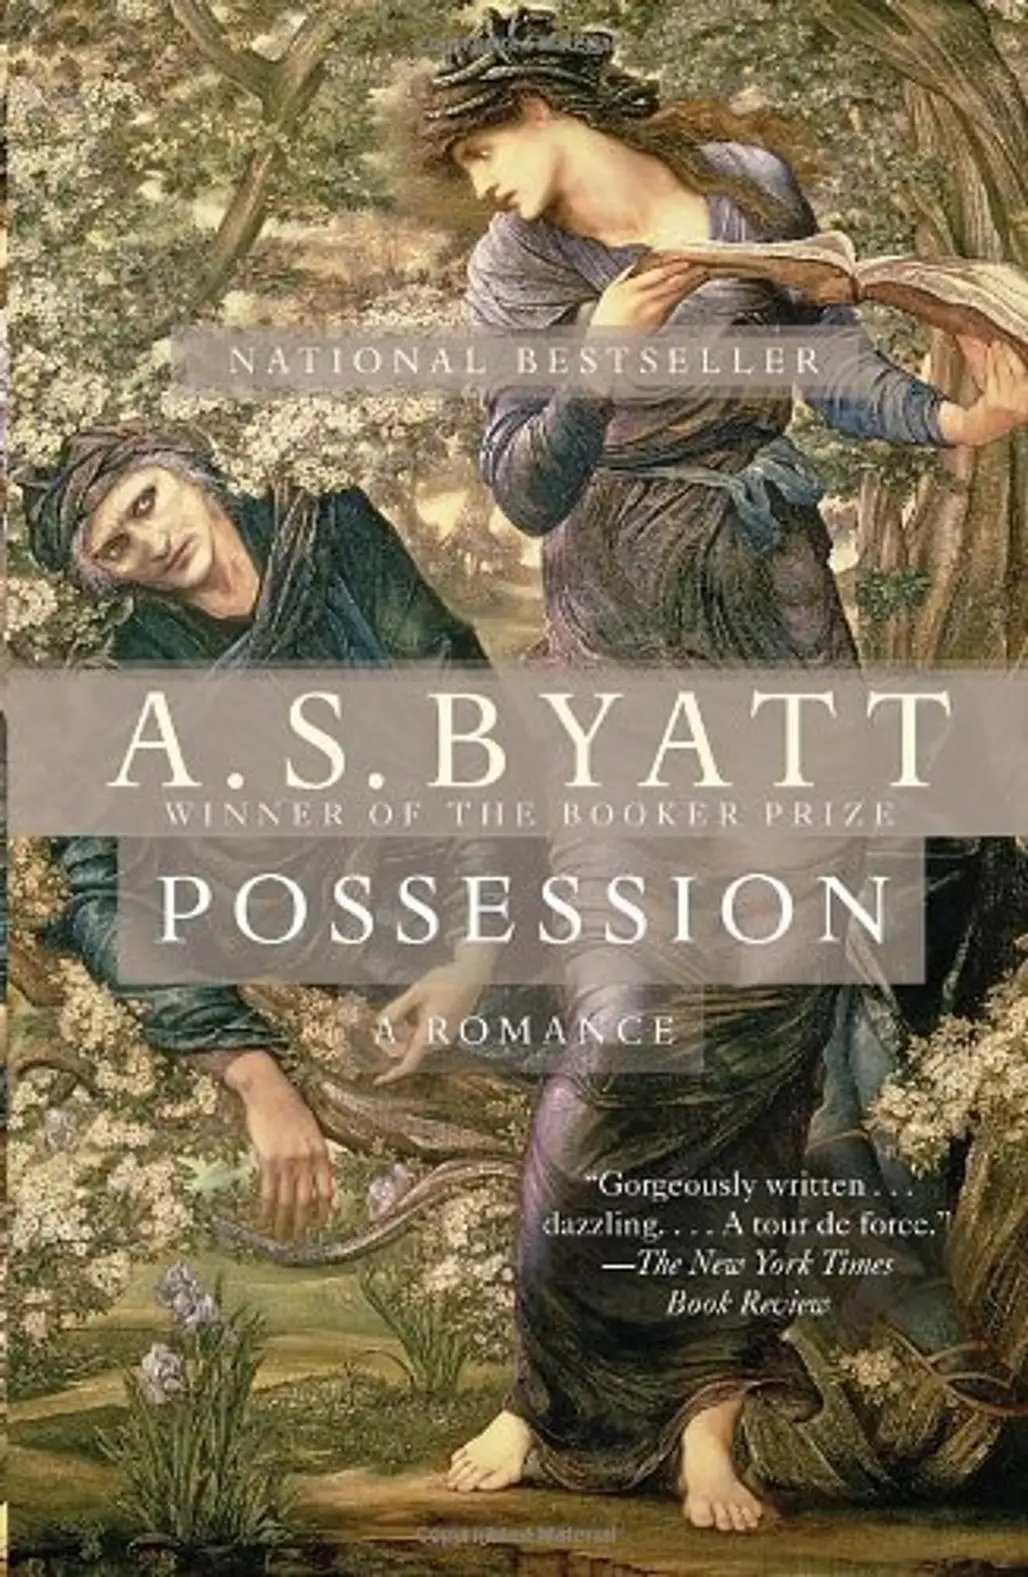 Possession – a.S. Byatt